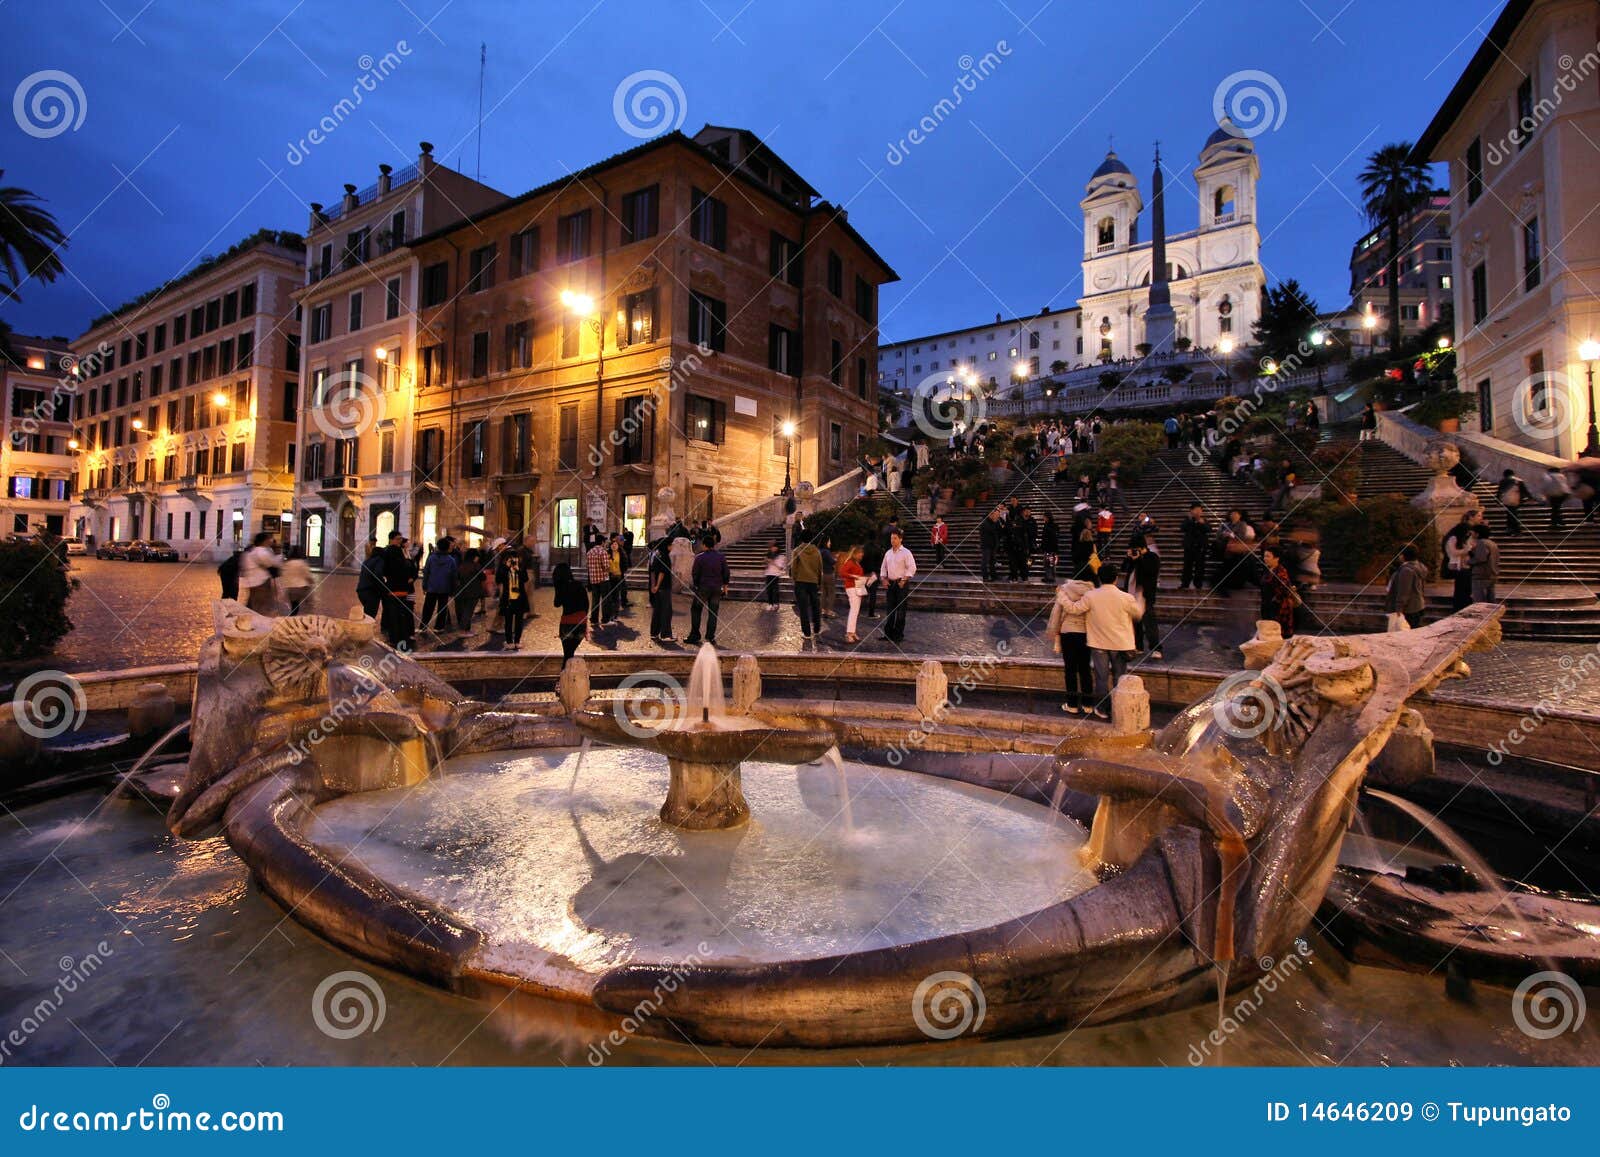 Spagna Di piazza. 10 2010 city destinations Di fountain εικονική Ιταλία του μπορούν ο περισσότερος ένας πλατειών της Ρώμης s spagna ισπανικός τετραγώνων κόσμος τουριστών τουρισμού βημάτων strolling κορυφαίος